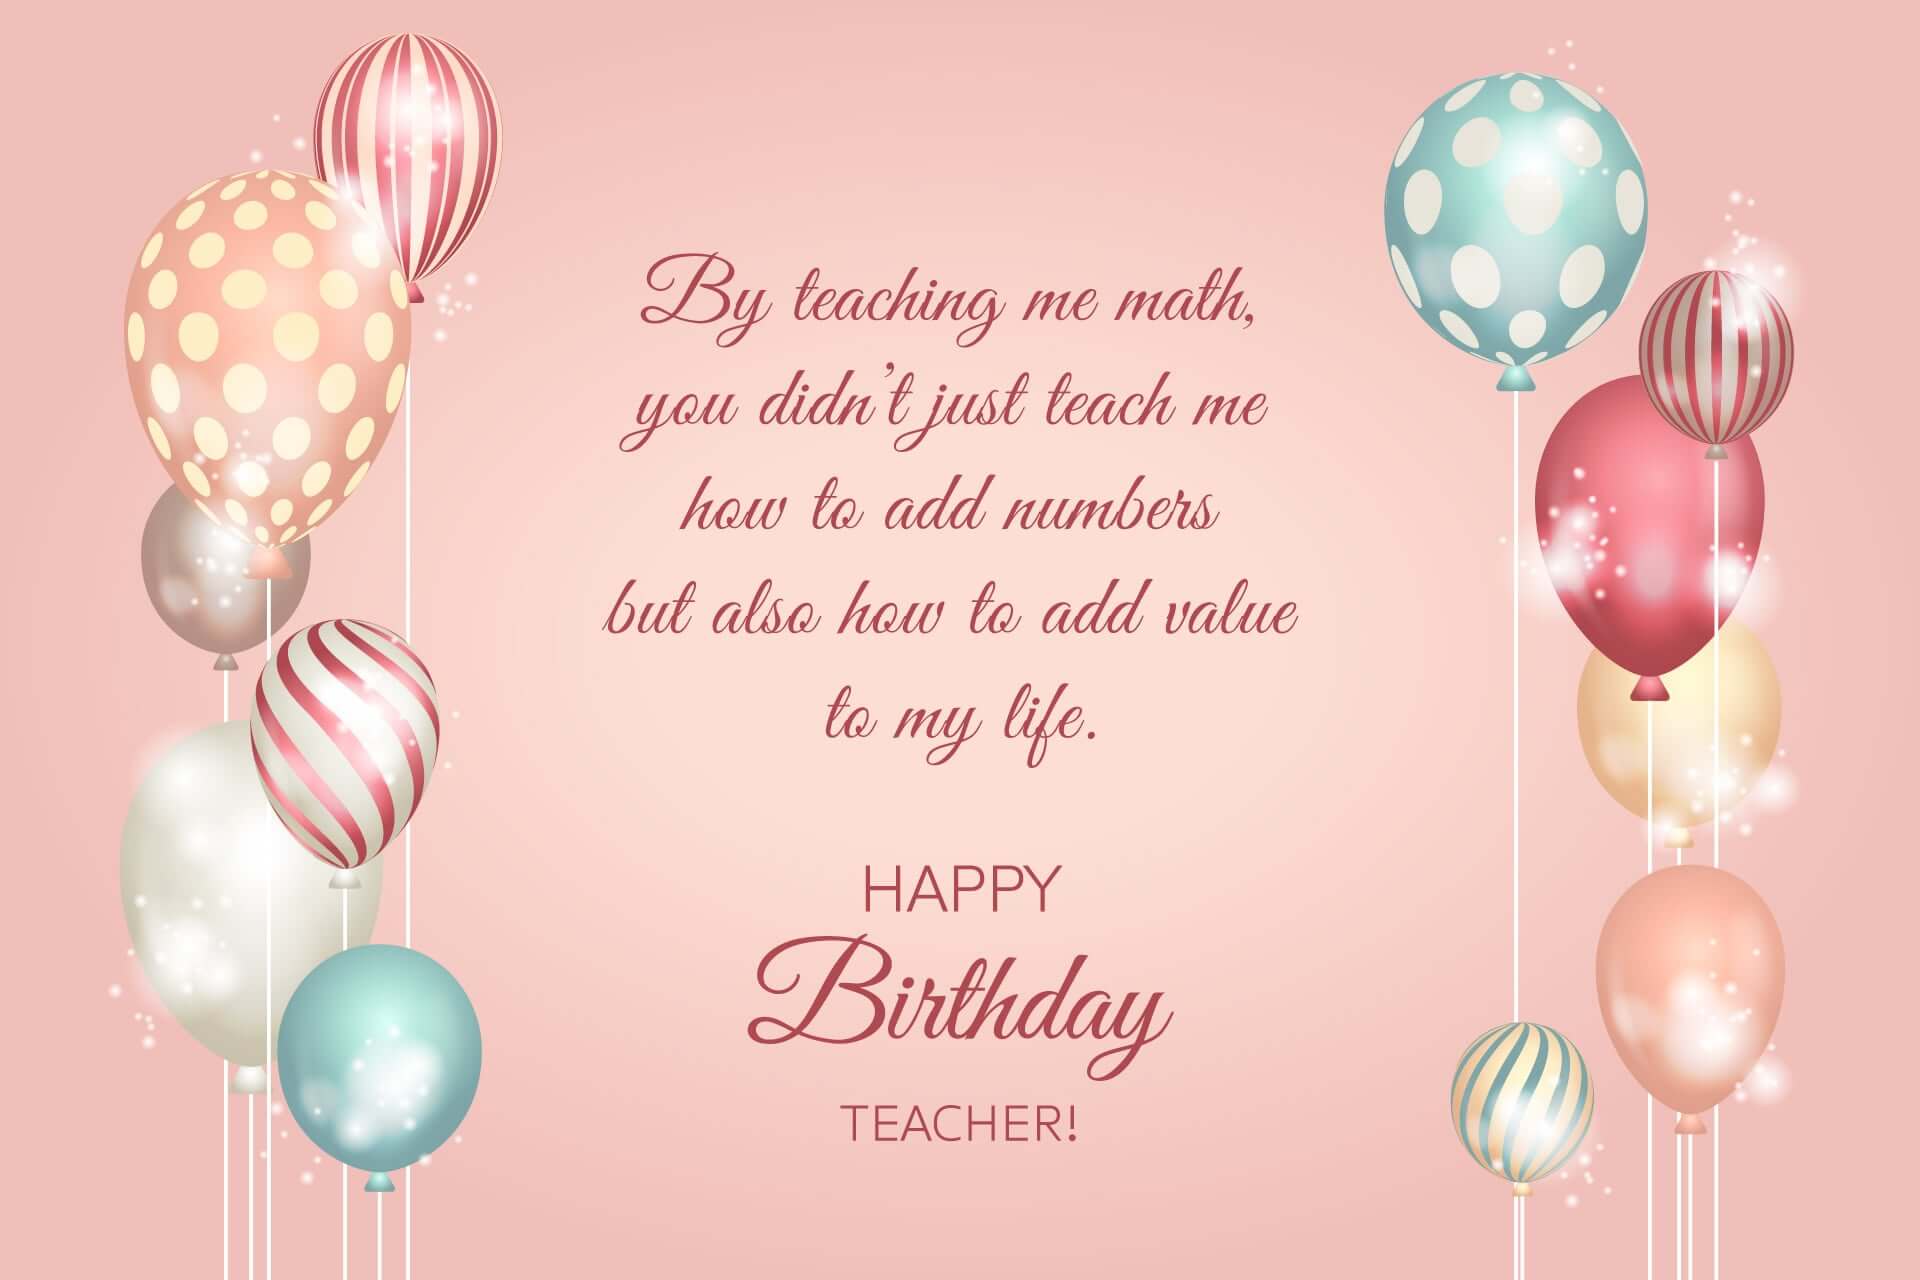 Happy Birthday Wishes for Teacher. Best Birthday Wishes 2020